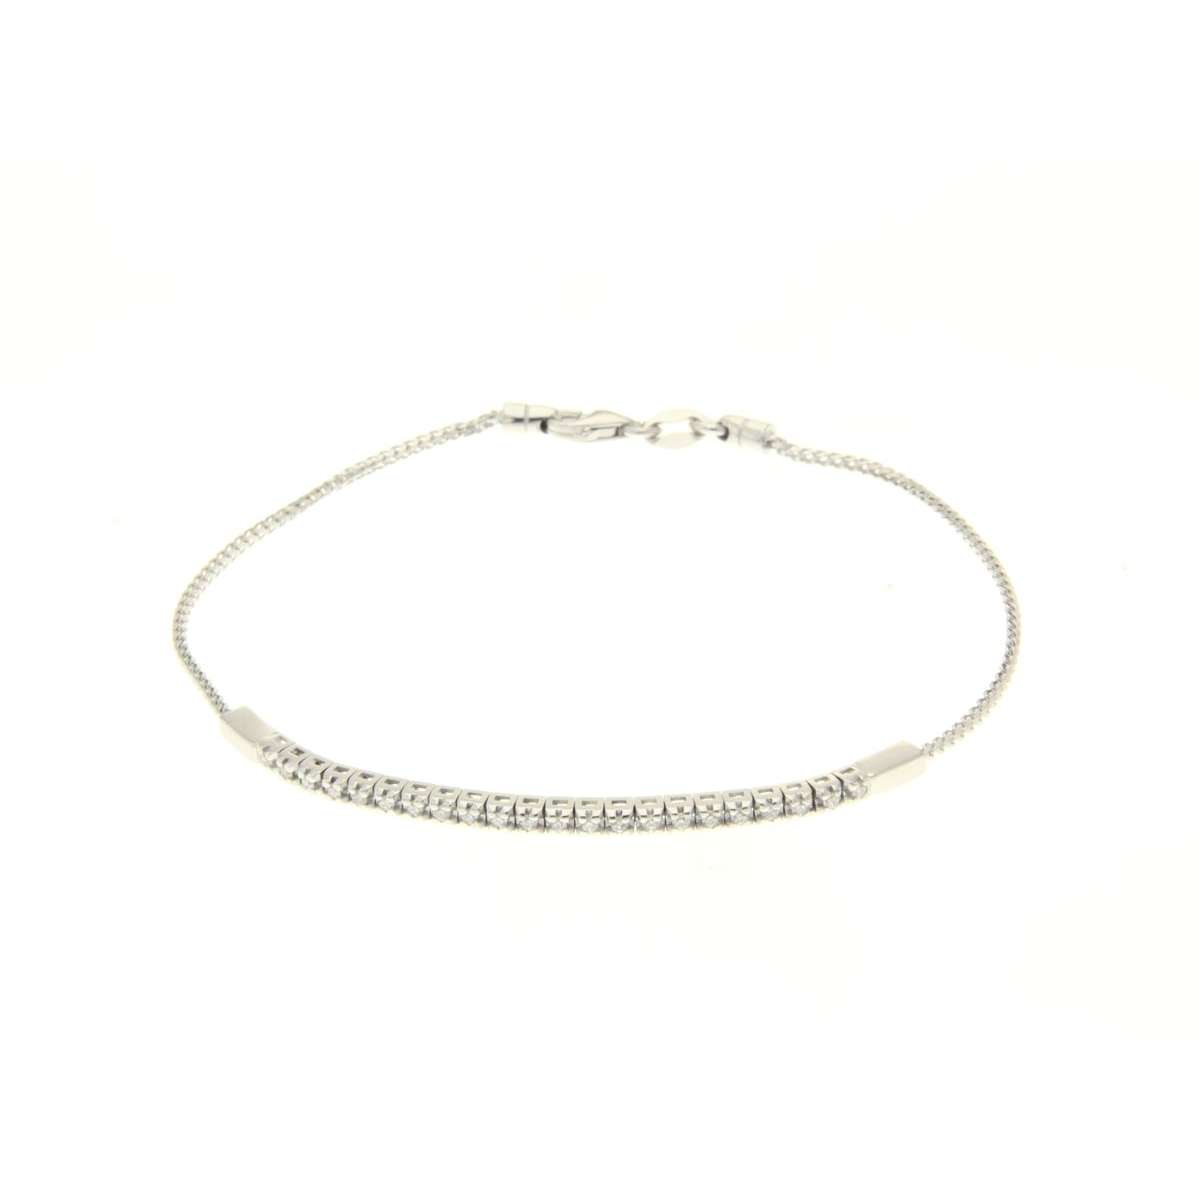 Tennis bracelet 0.15 carats diamonds G-VS1